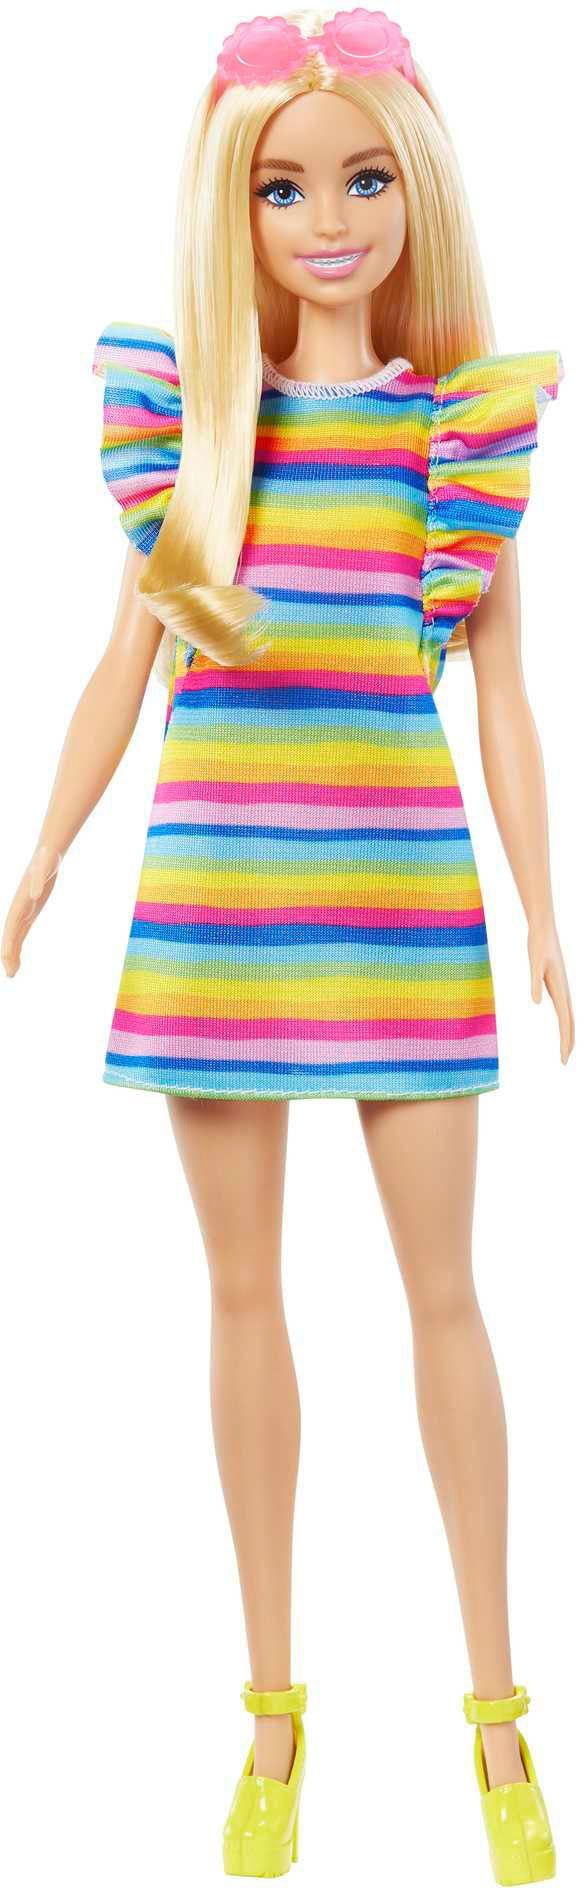 Super günstig & neu! Barbie Anziehpuppe Braces Dress and Fashionistas, Tiered